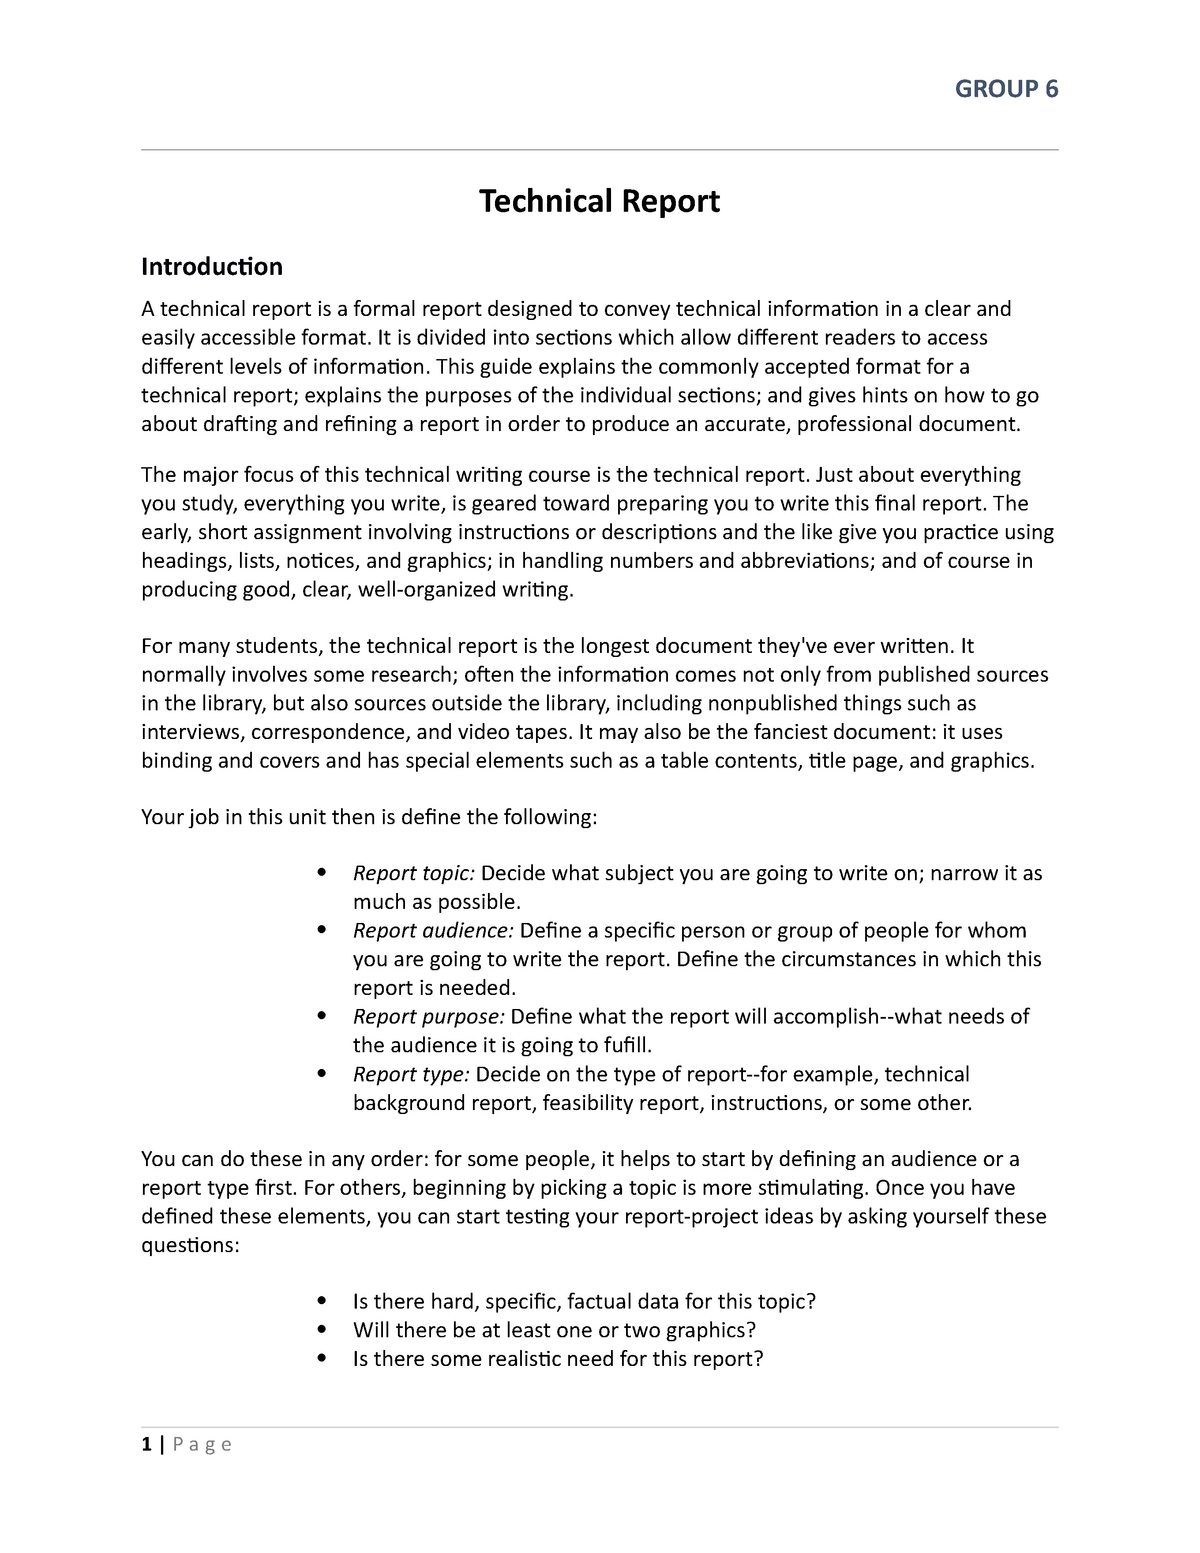 dissertation technical report